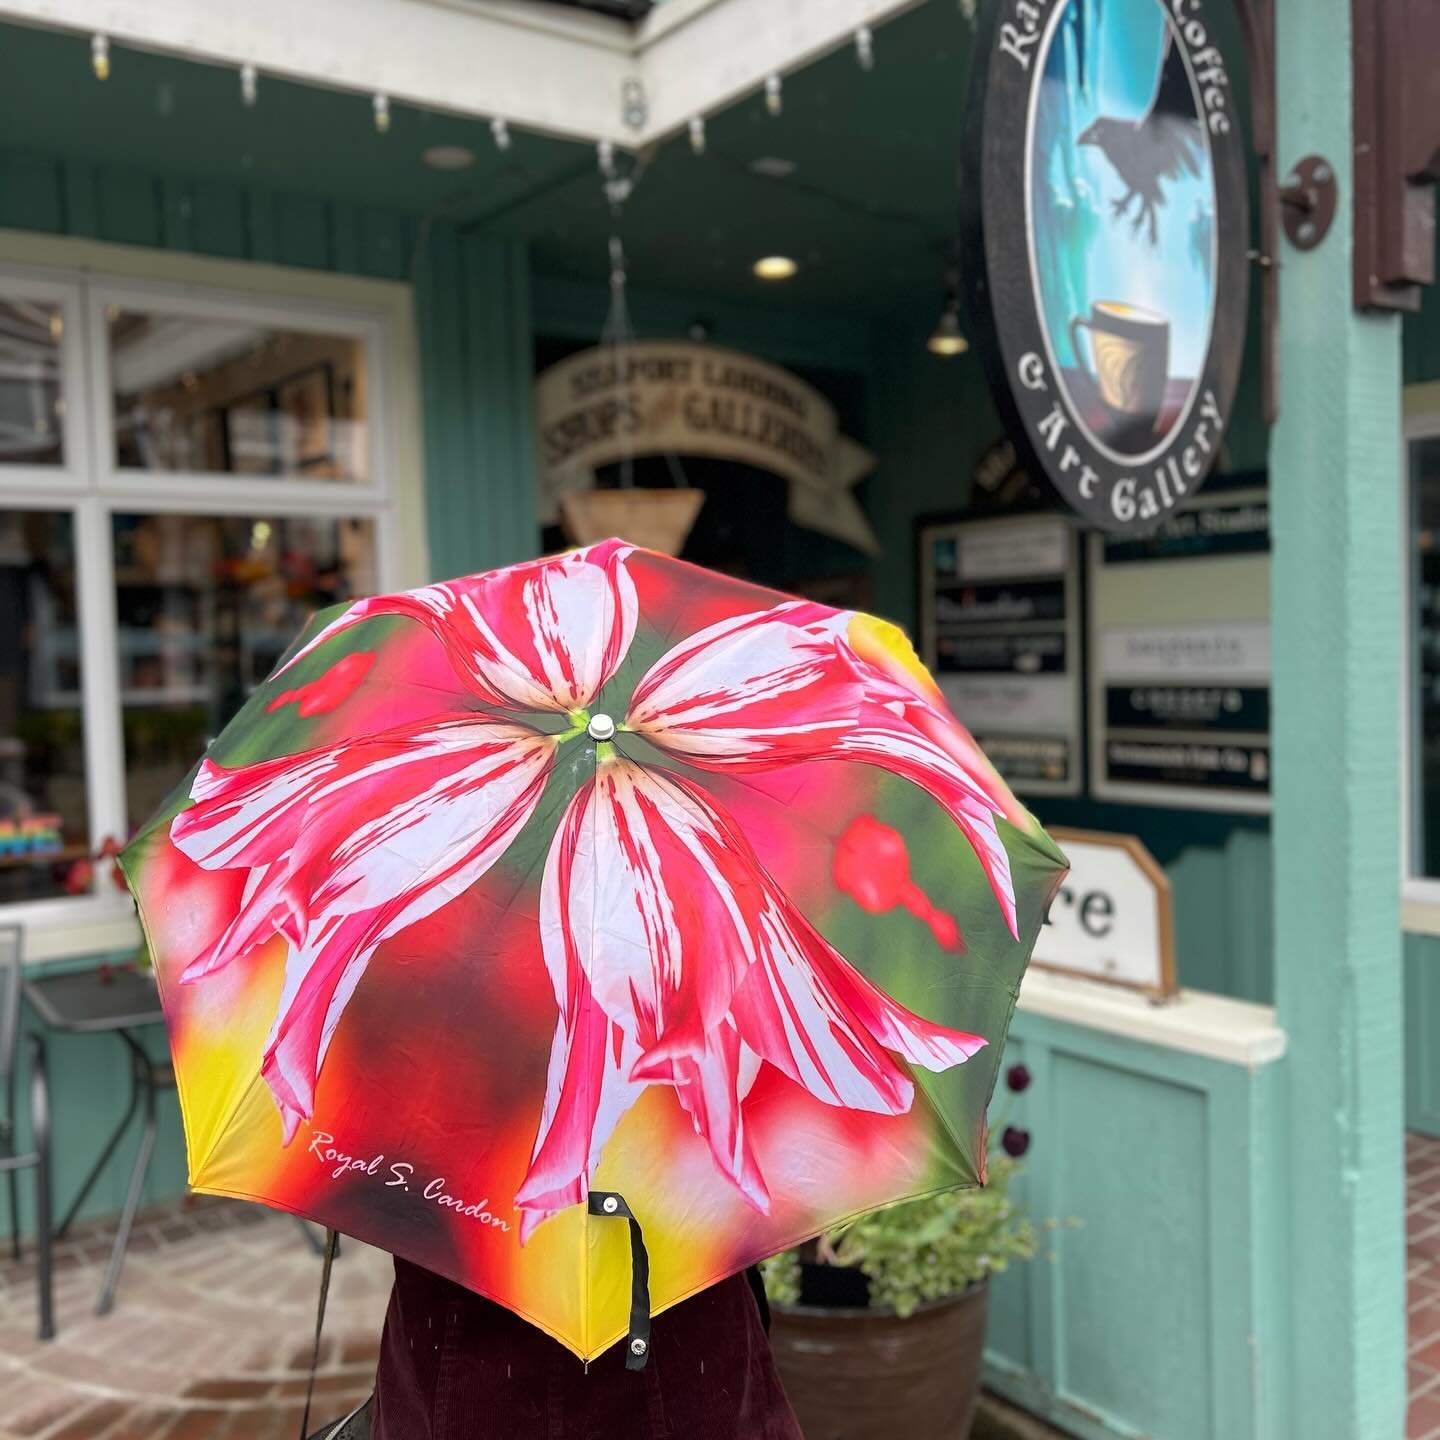 Royal S Cardon umbrellas available so you can enjoy the rain in style! Only three left 🌷☔️
#lovelaconner #tulipfestival #skagitvalleytulipfestival #coffee